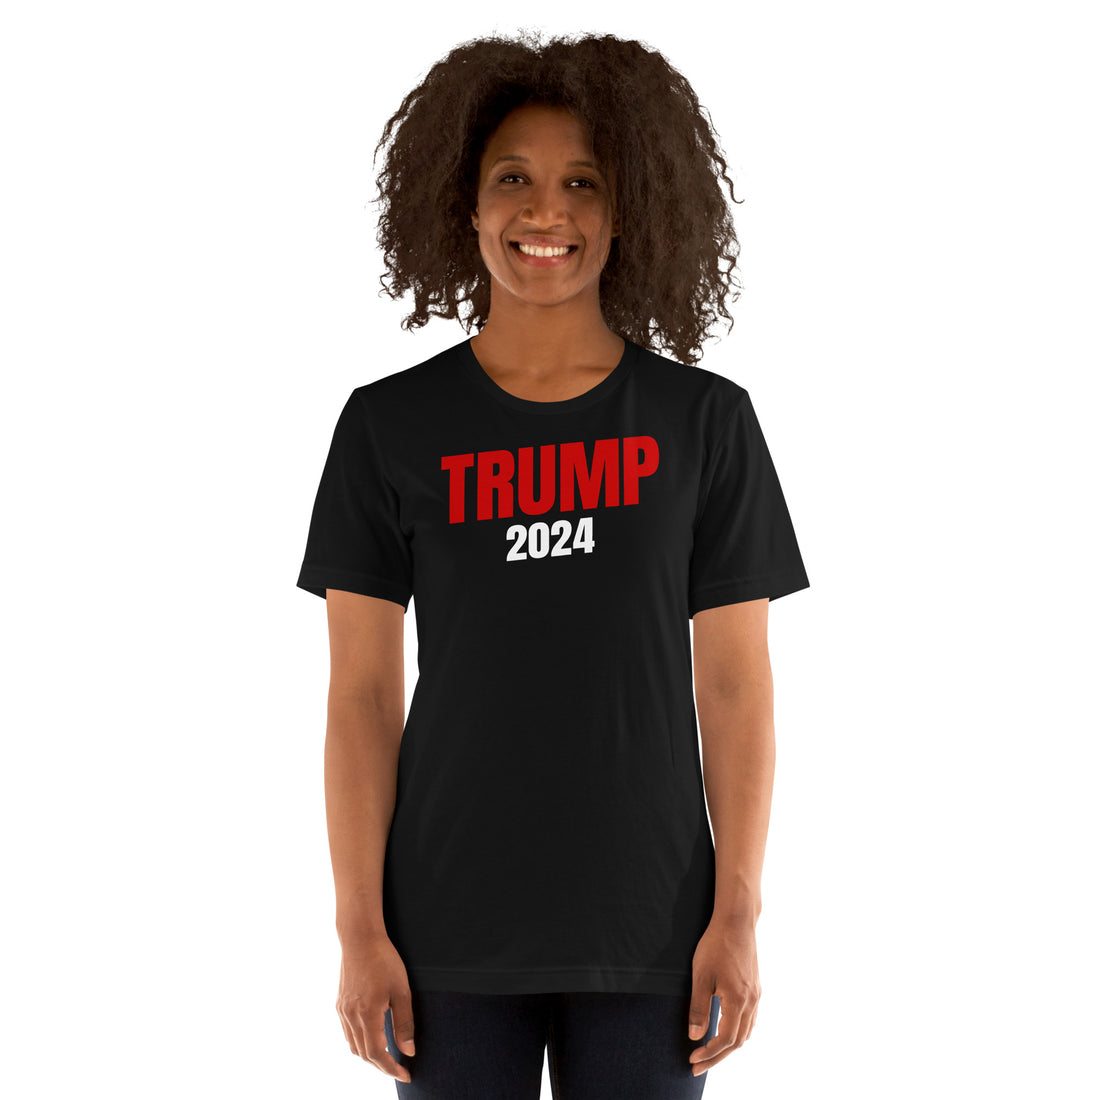 TRUMP 2024 t-shirt